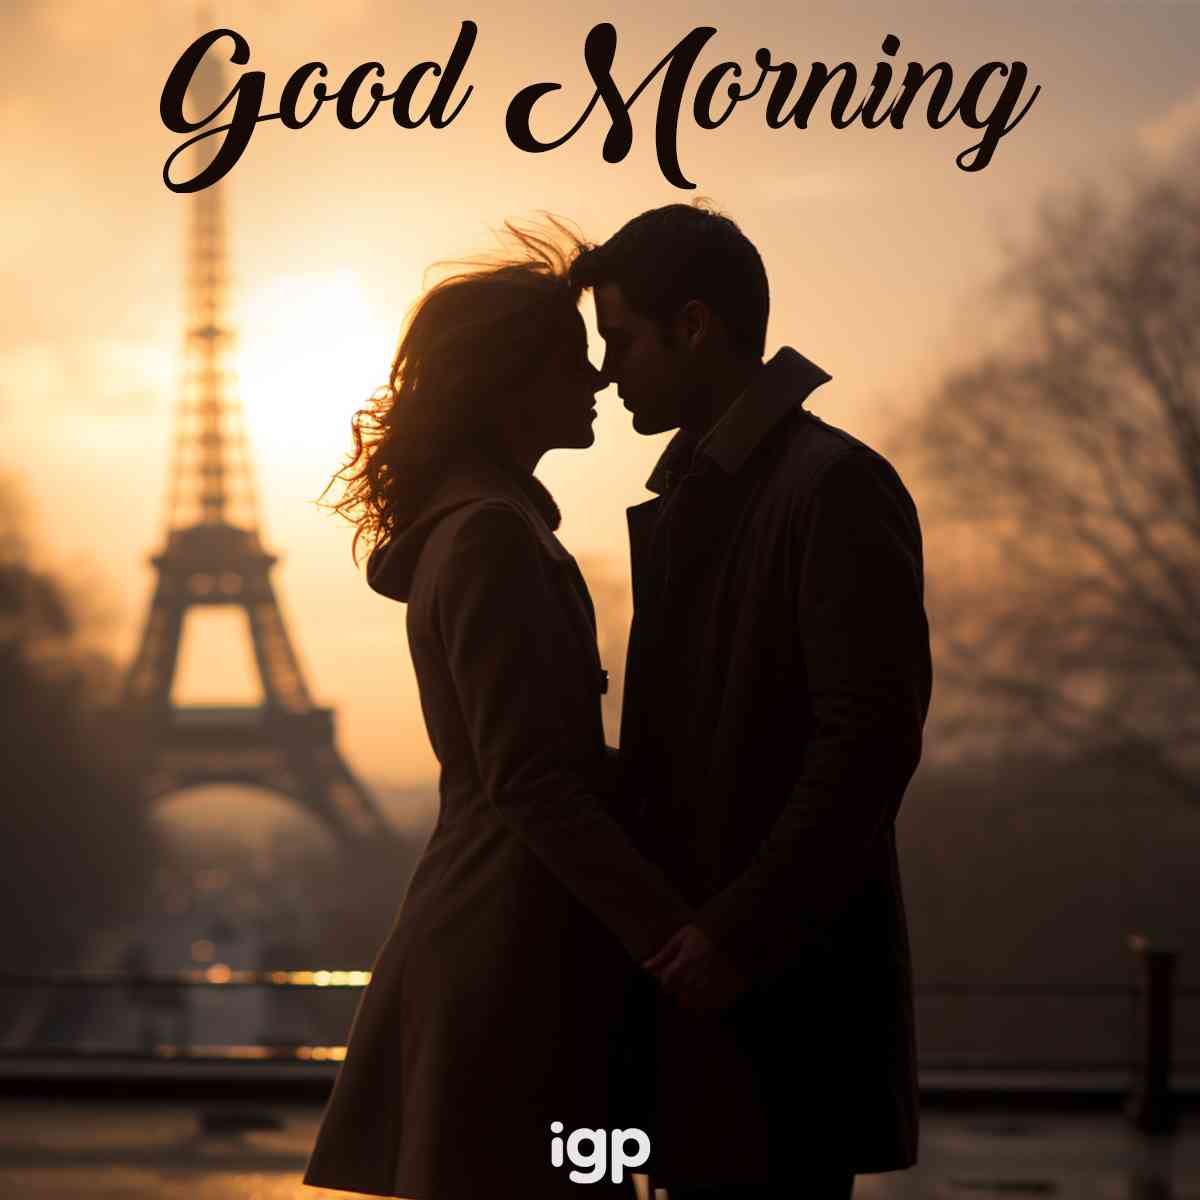 morning romantic couple image